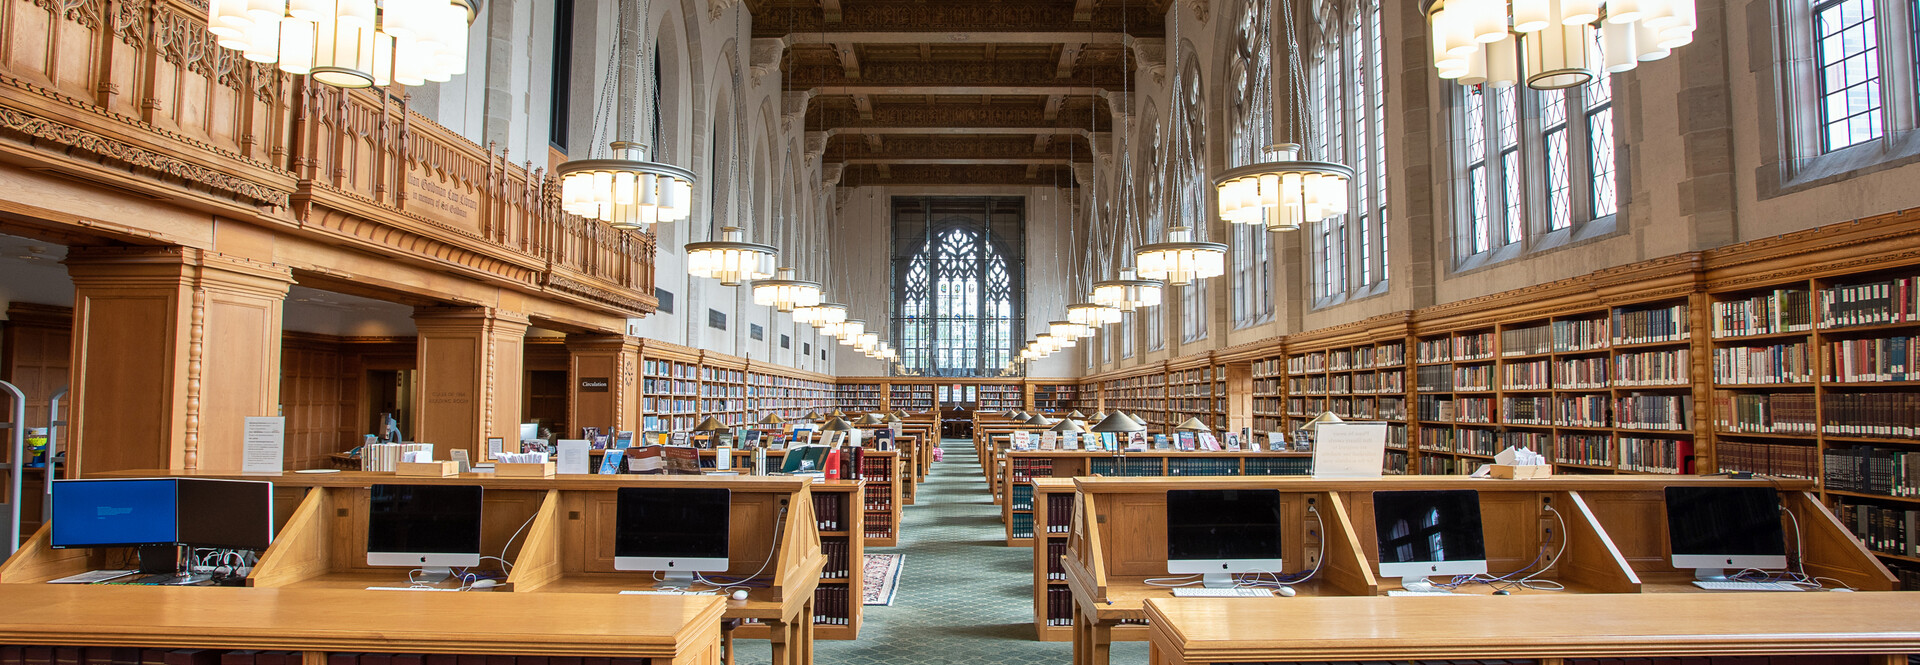 Yale Law School library